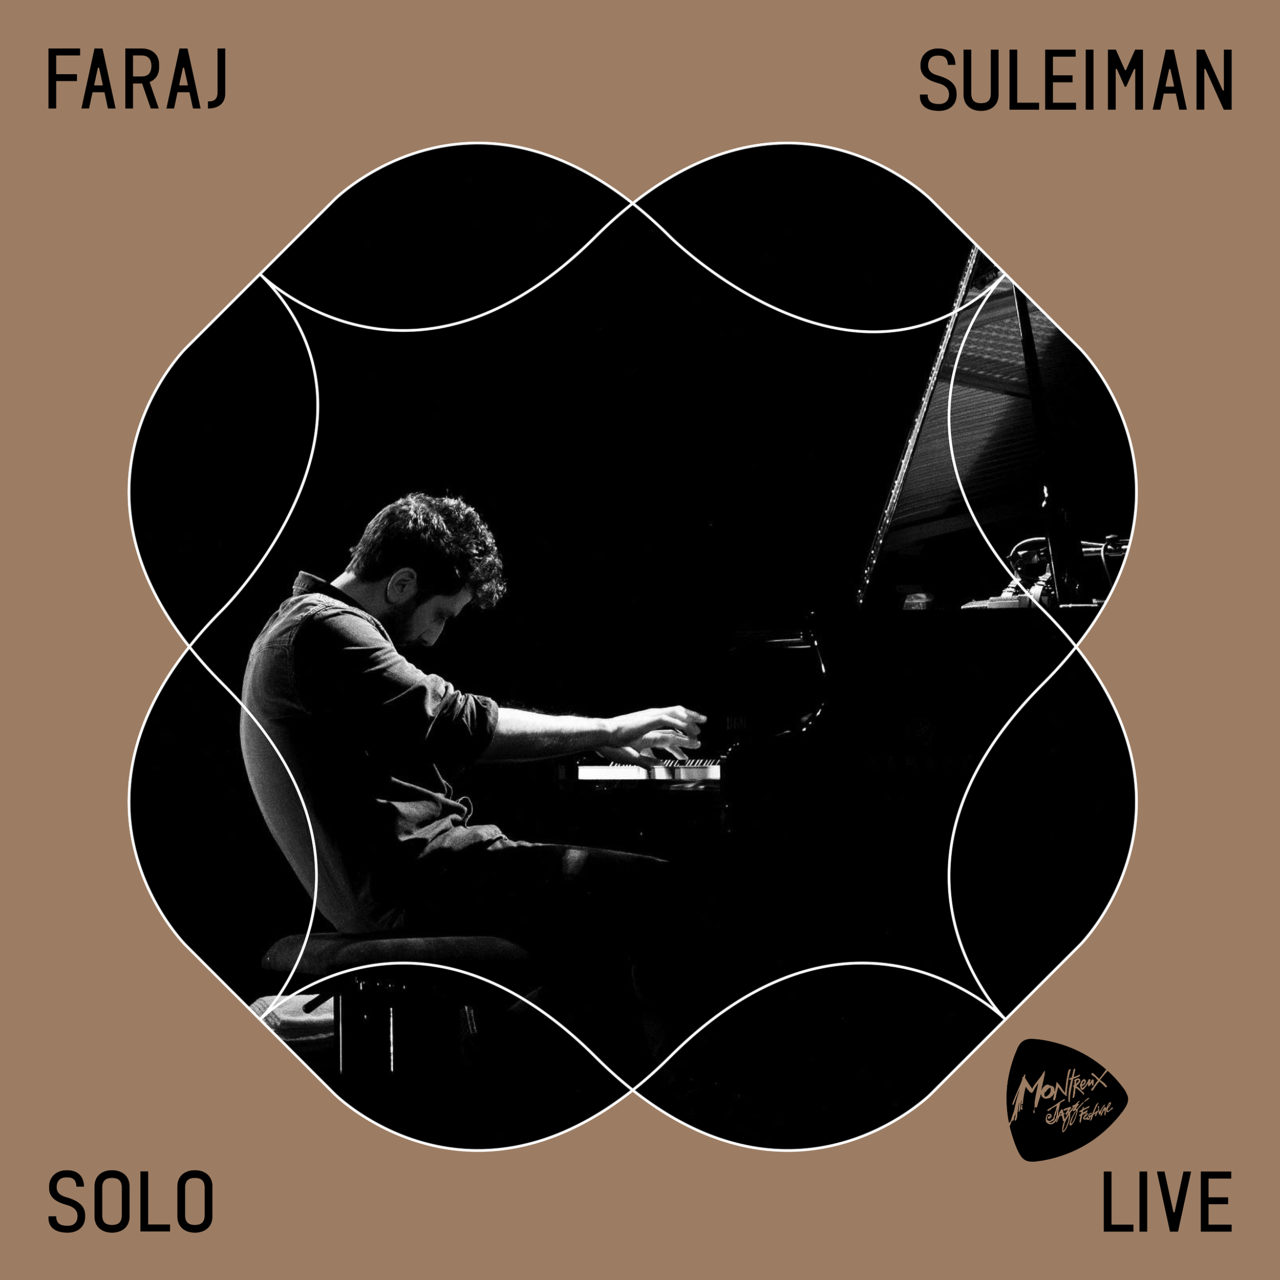 FARAJ SULEIMAN - Solo @ Montreux Jazz Festival 2018